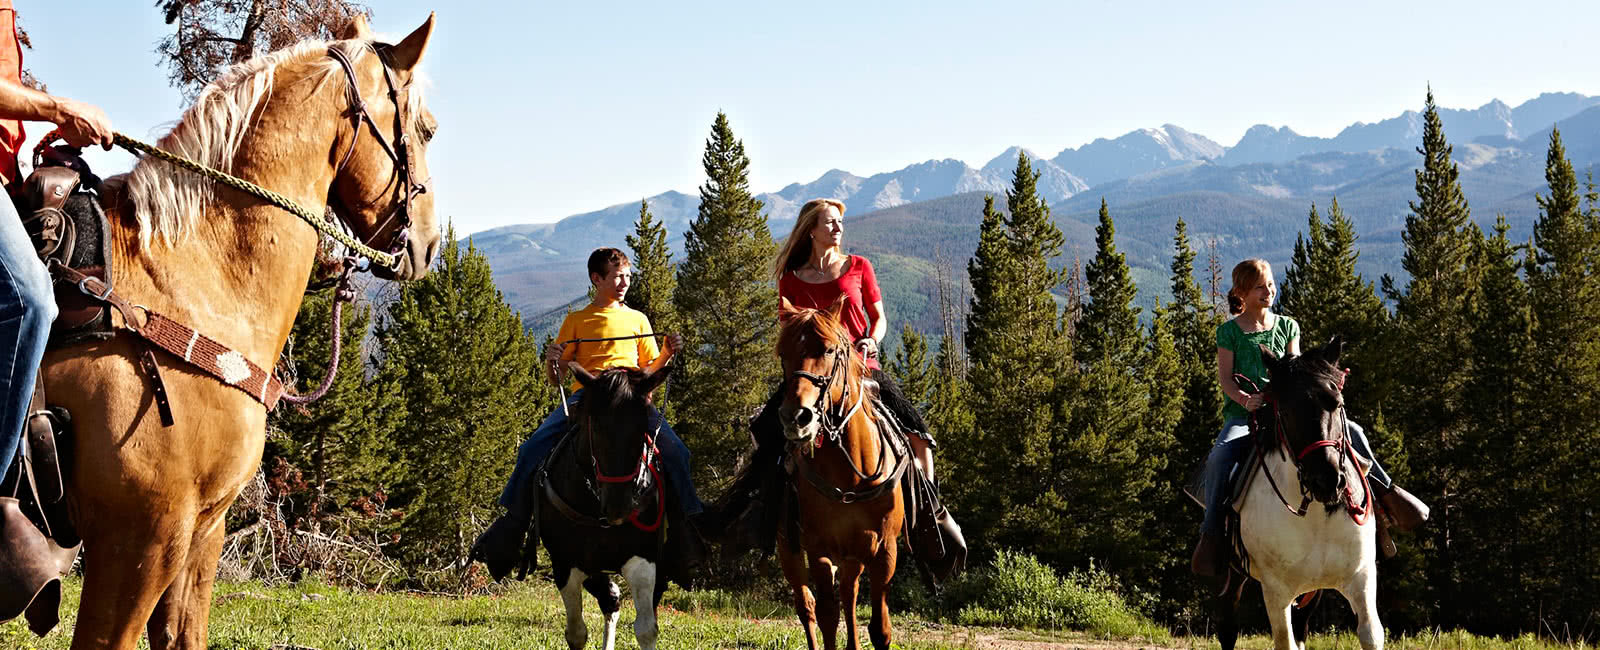 Enjoy horseback riding on a Colorado vacation with Hilton Grand Vacations